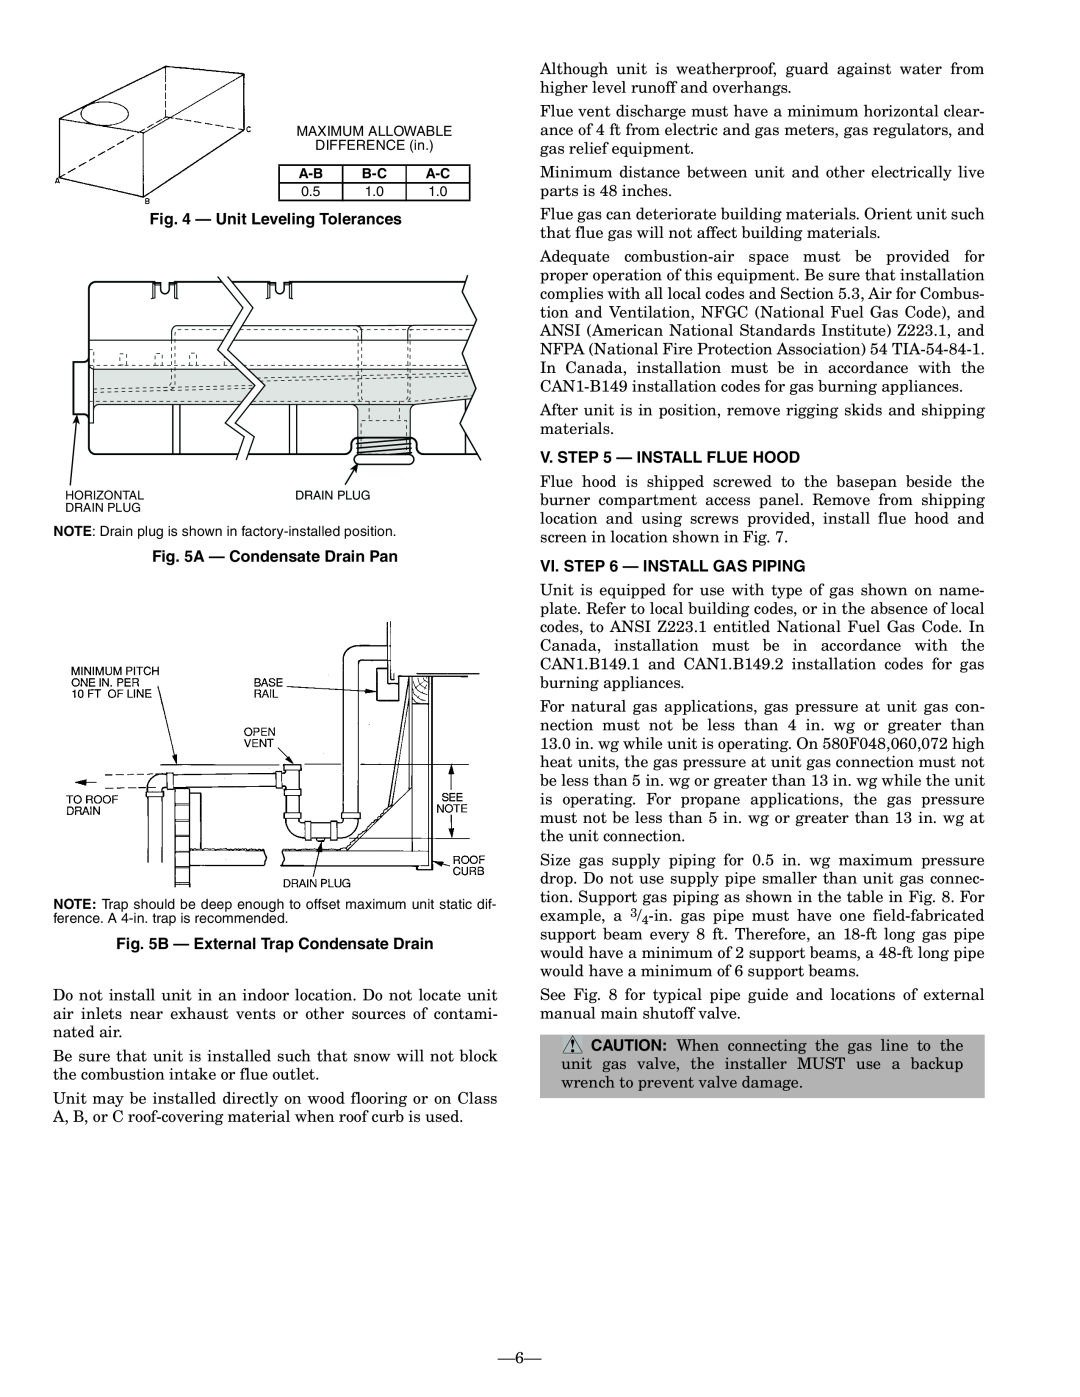 Bryant 580F Unit Leveling Tolerances, A - Condensate Drain Pan, B - External Trap Condensate Drain, V. - Install Flue Hood 